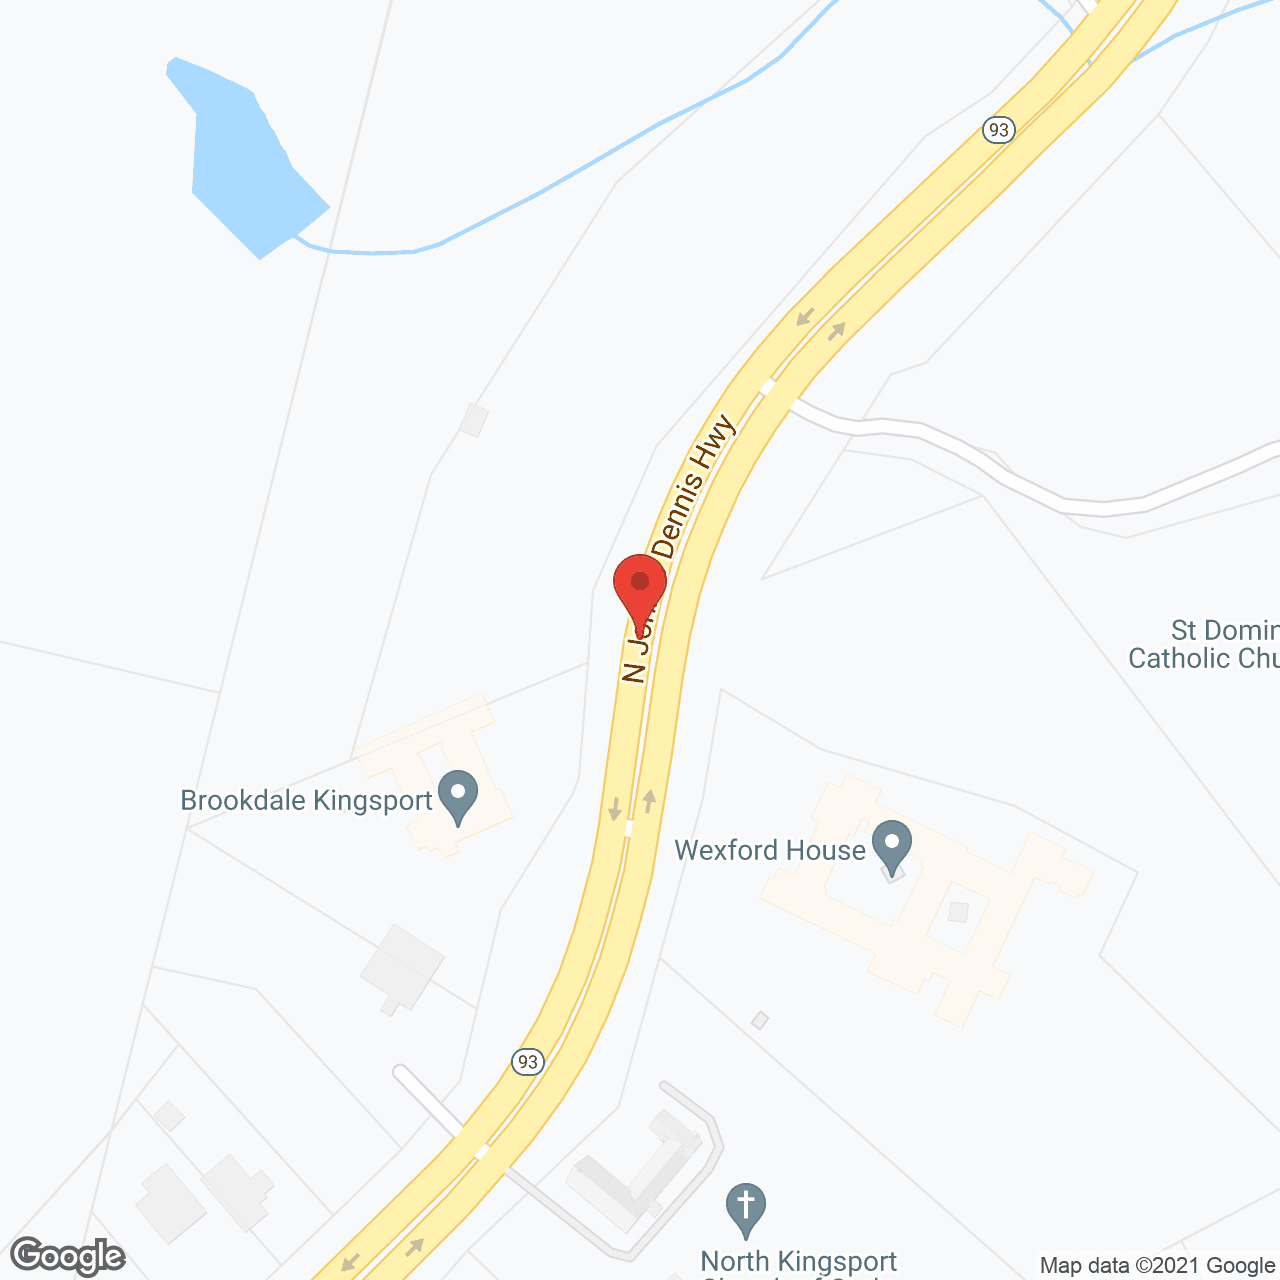 Brookdale Kingsport in google map